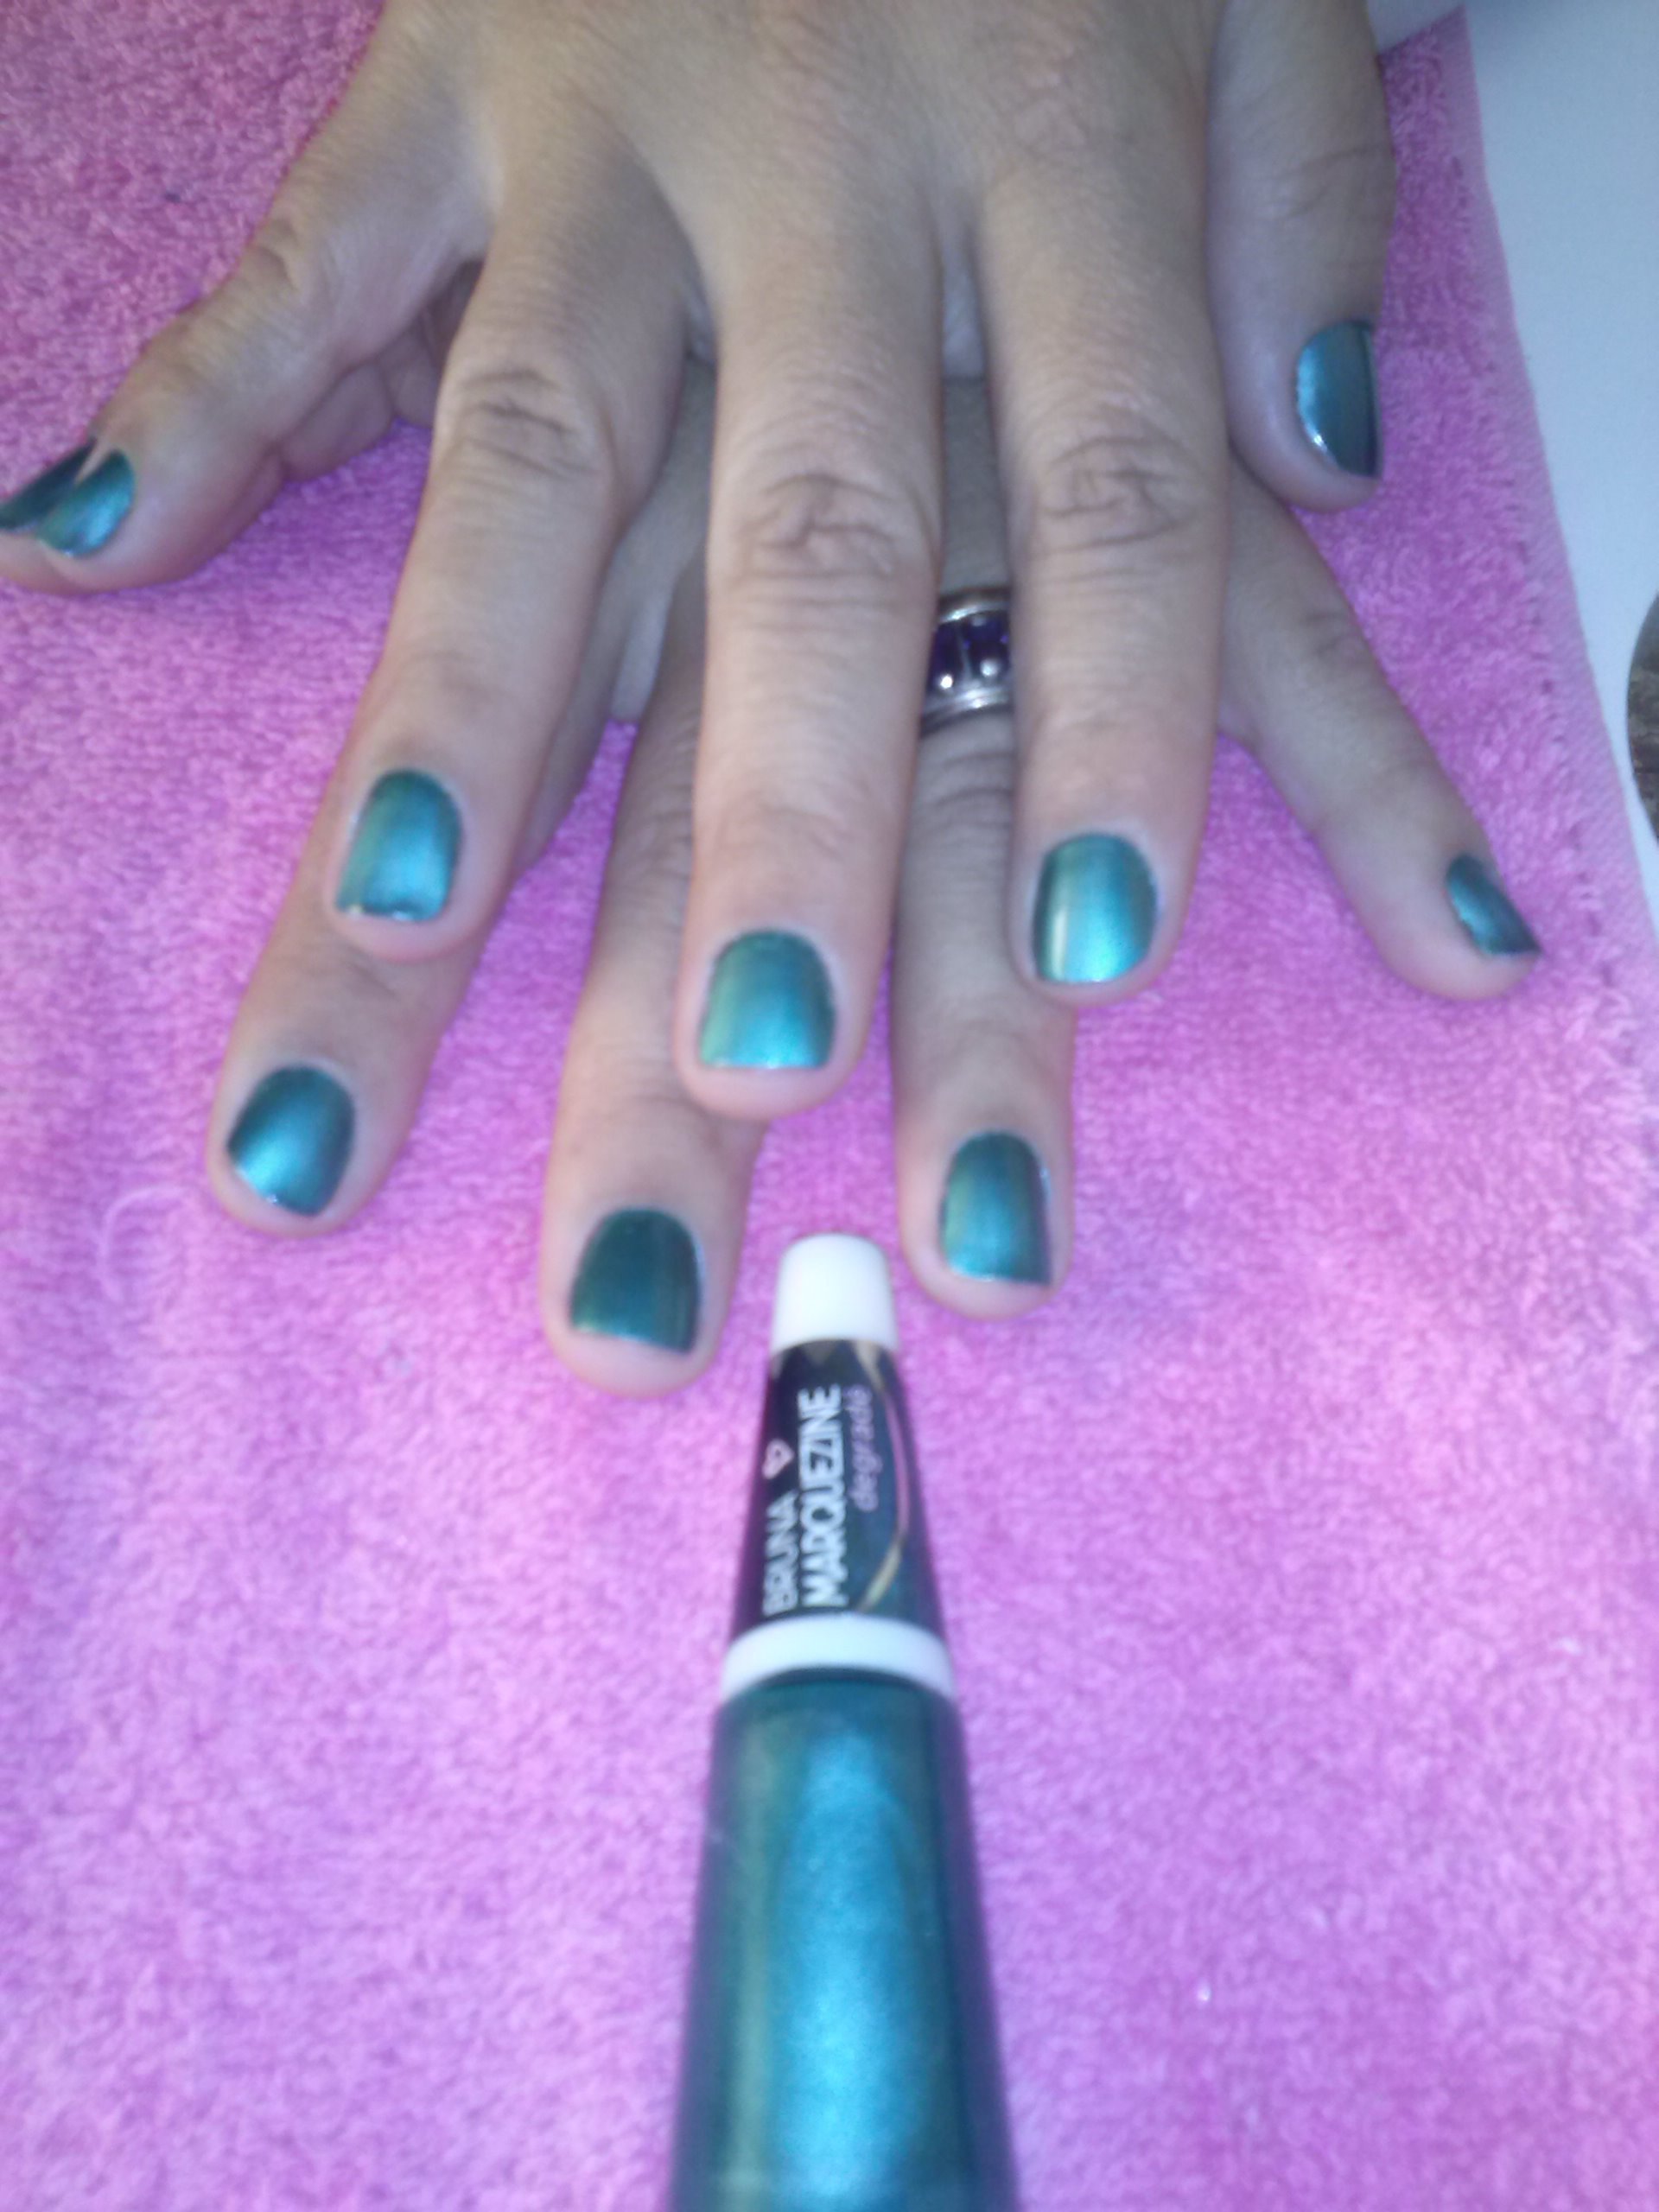 Unha da semana
#degrade
#verde
#lindodemais manicure e pedicure depilador(a)